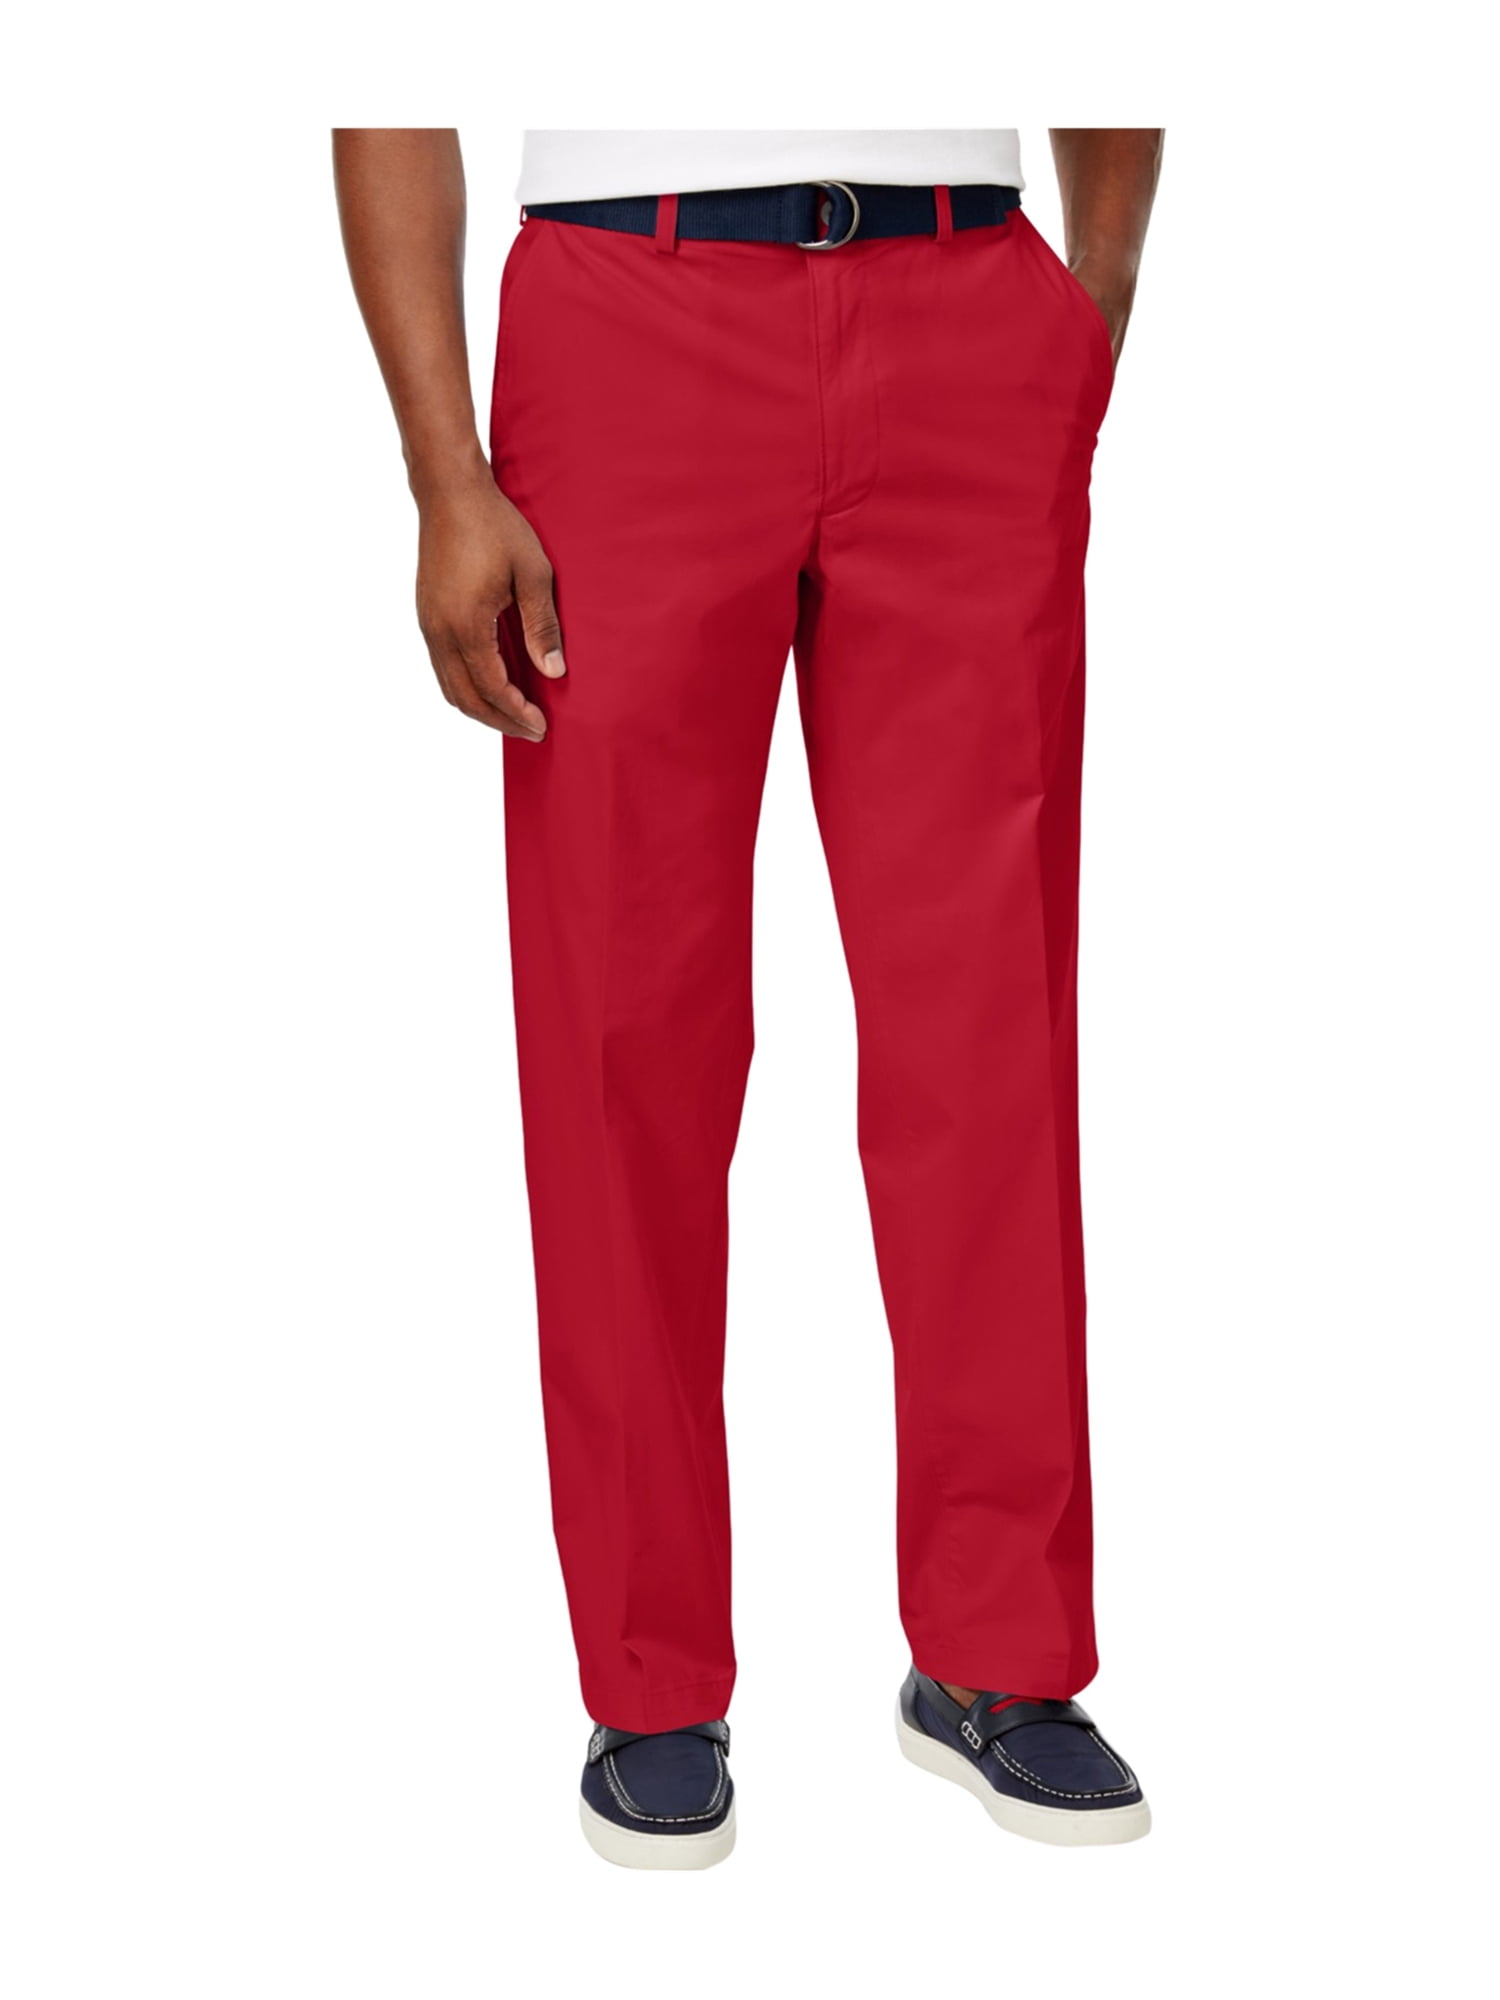 Haggar Mens Stretch Casual Chino Pants red 38x29 | Walmart Canada